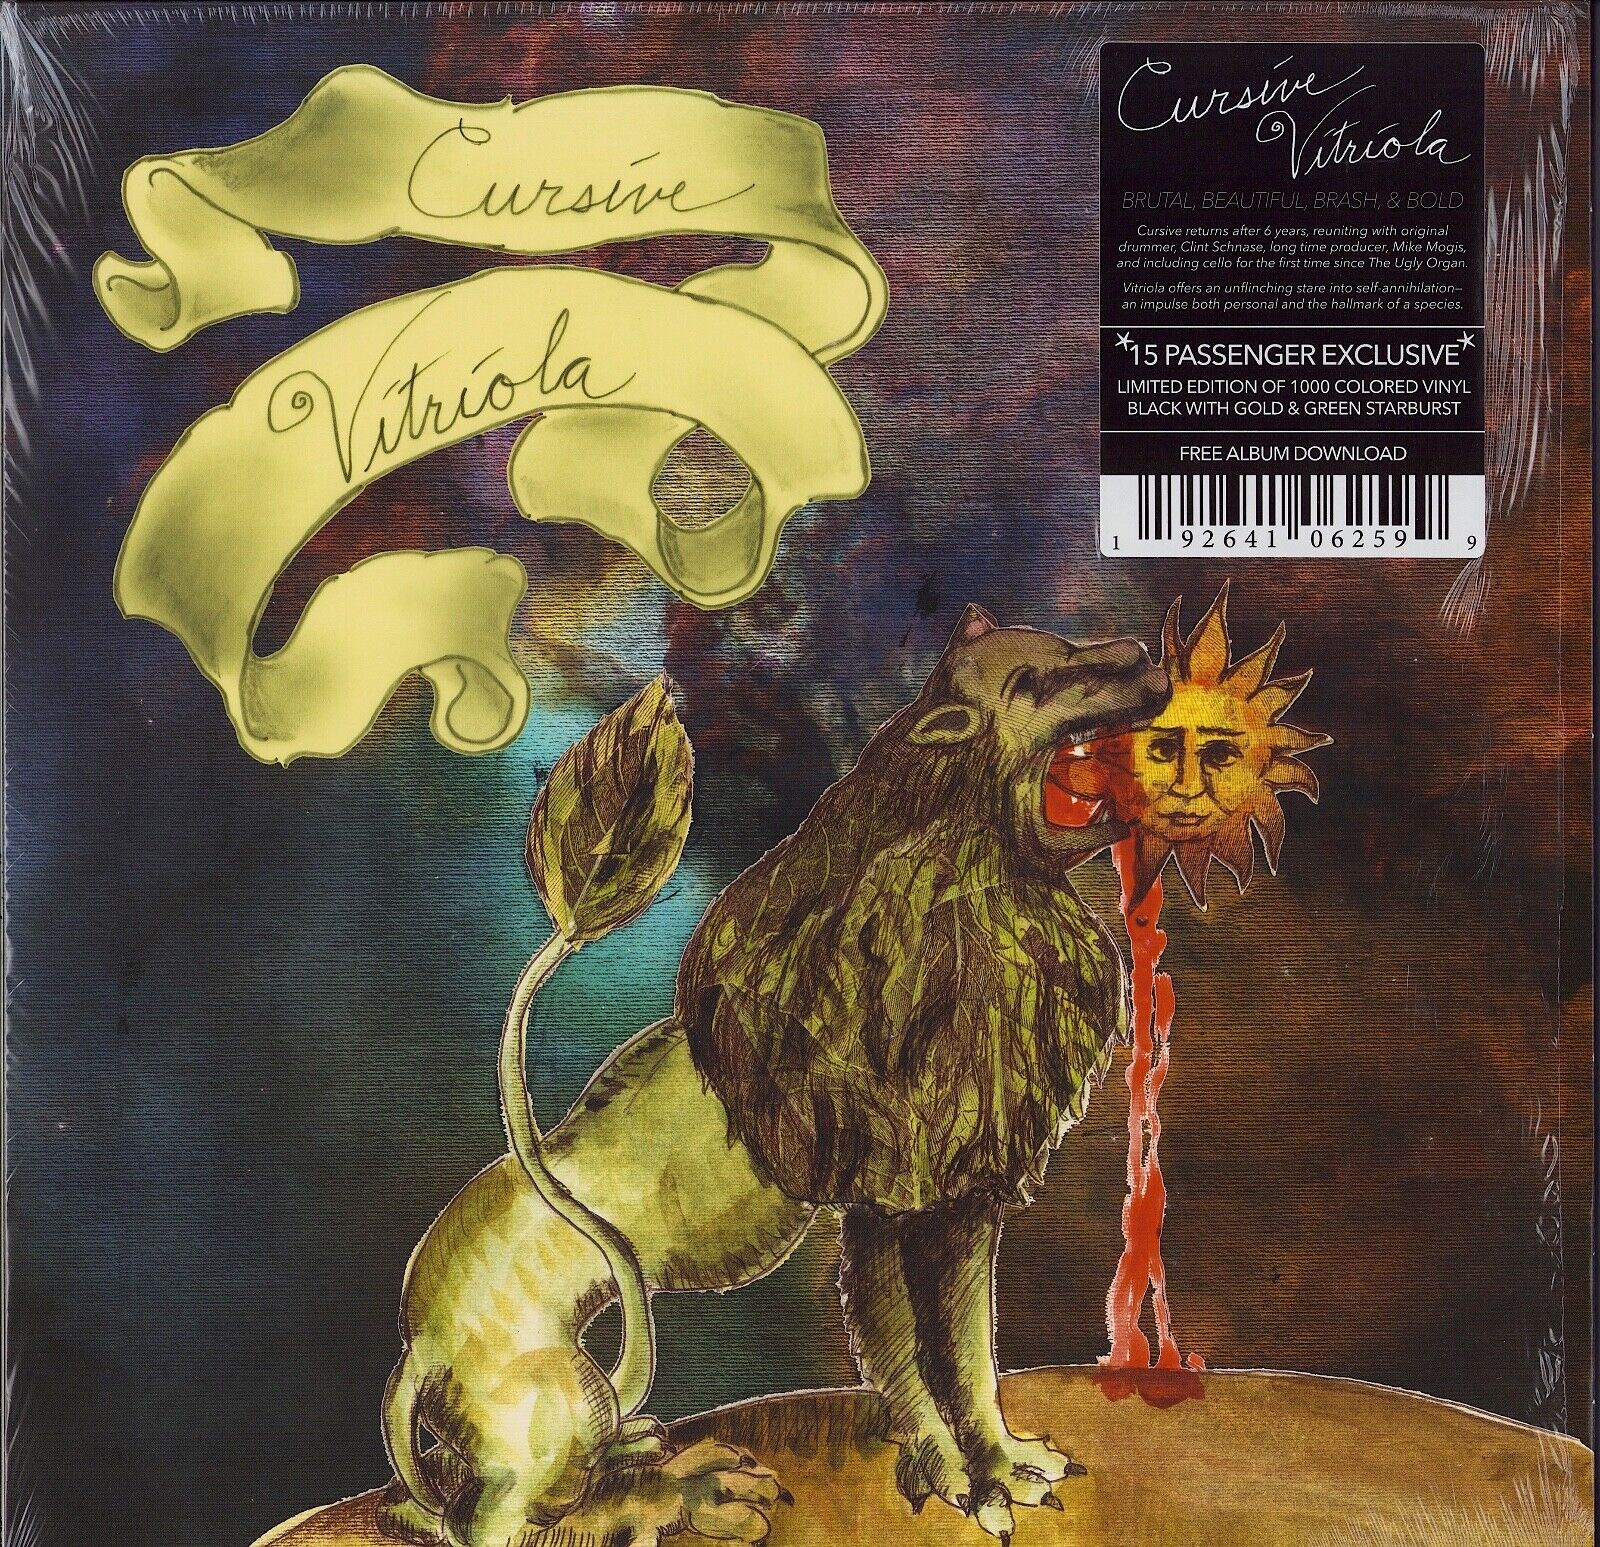 Cursive - Vitriola Black, Green, & Gold Starburst Vinyl LP Limited Edition